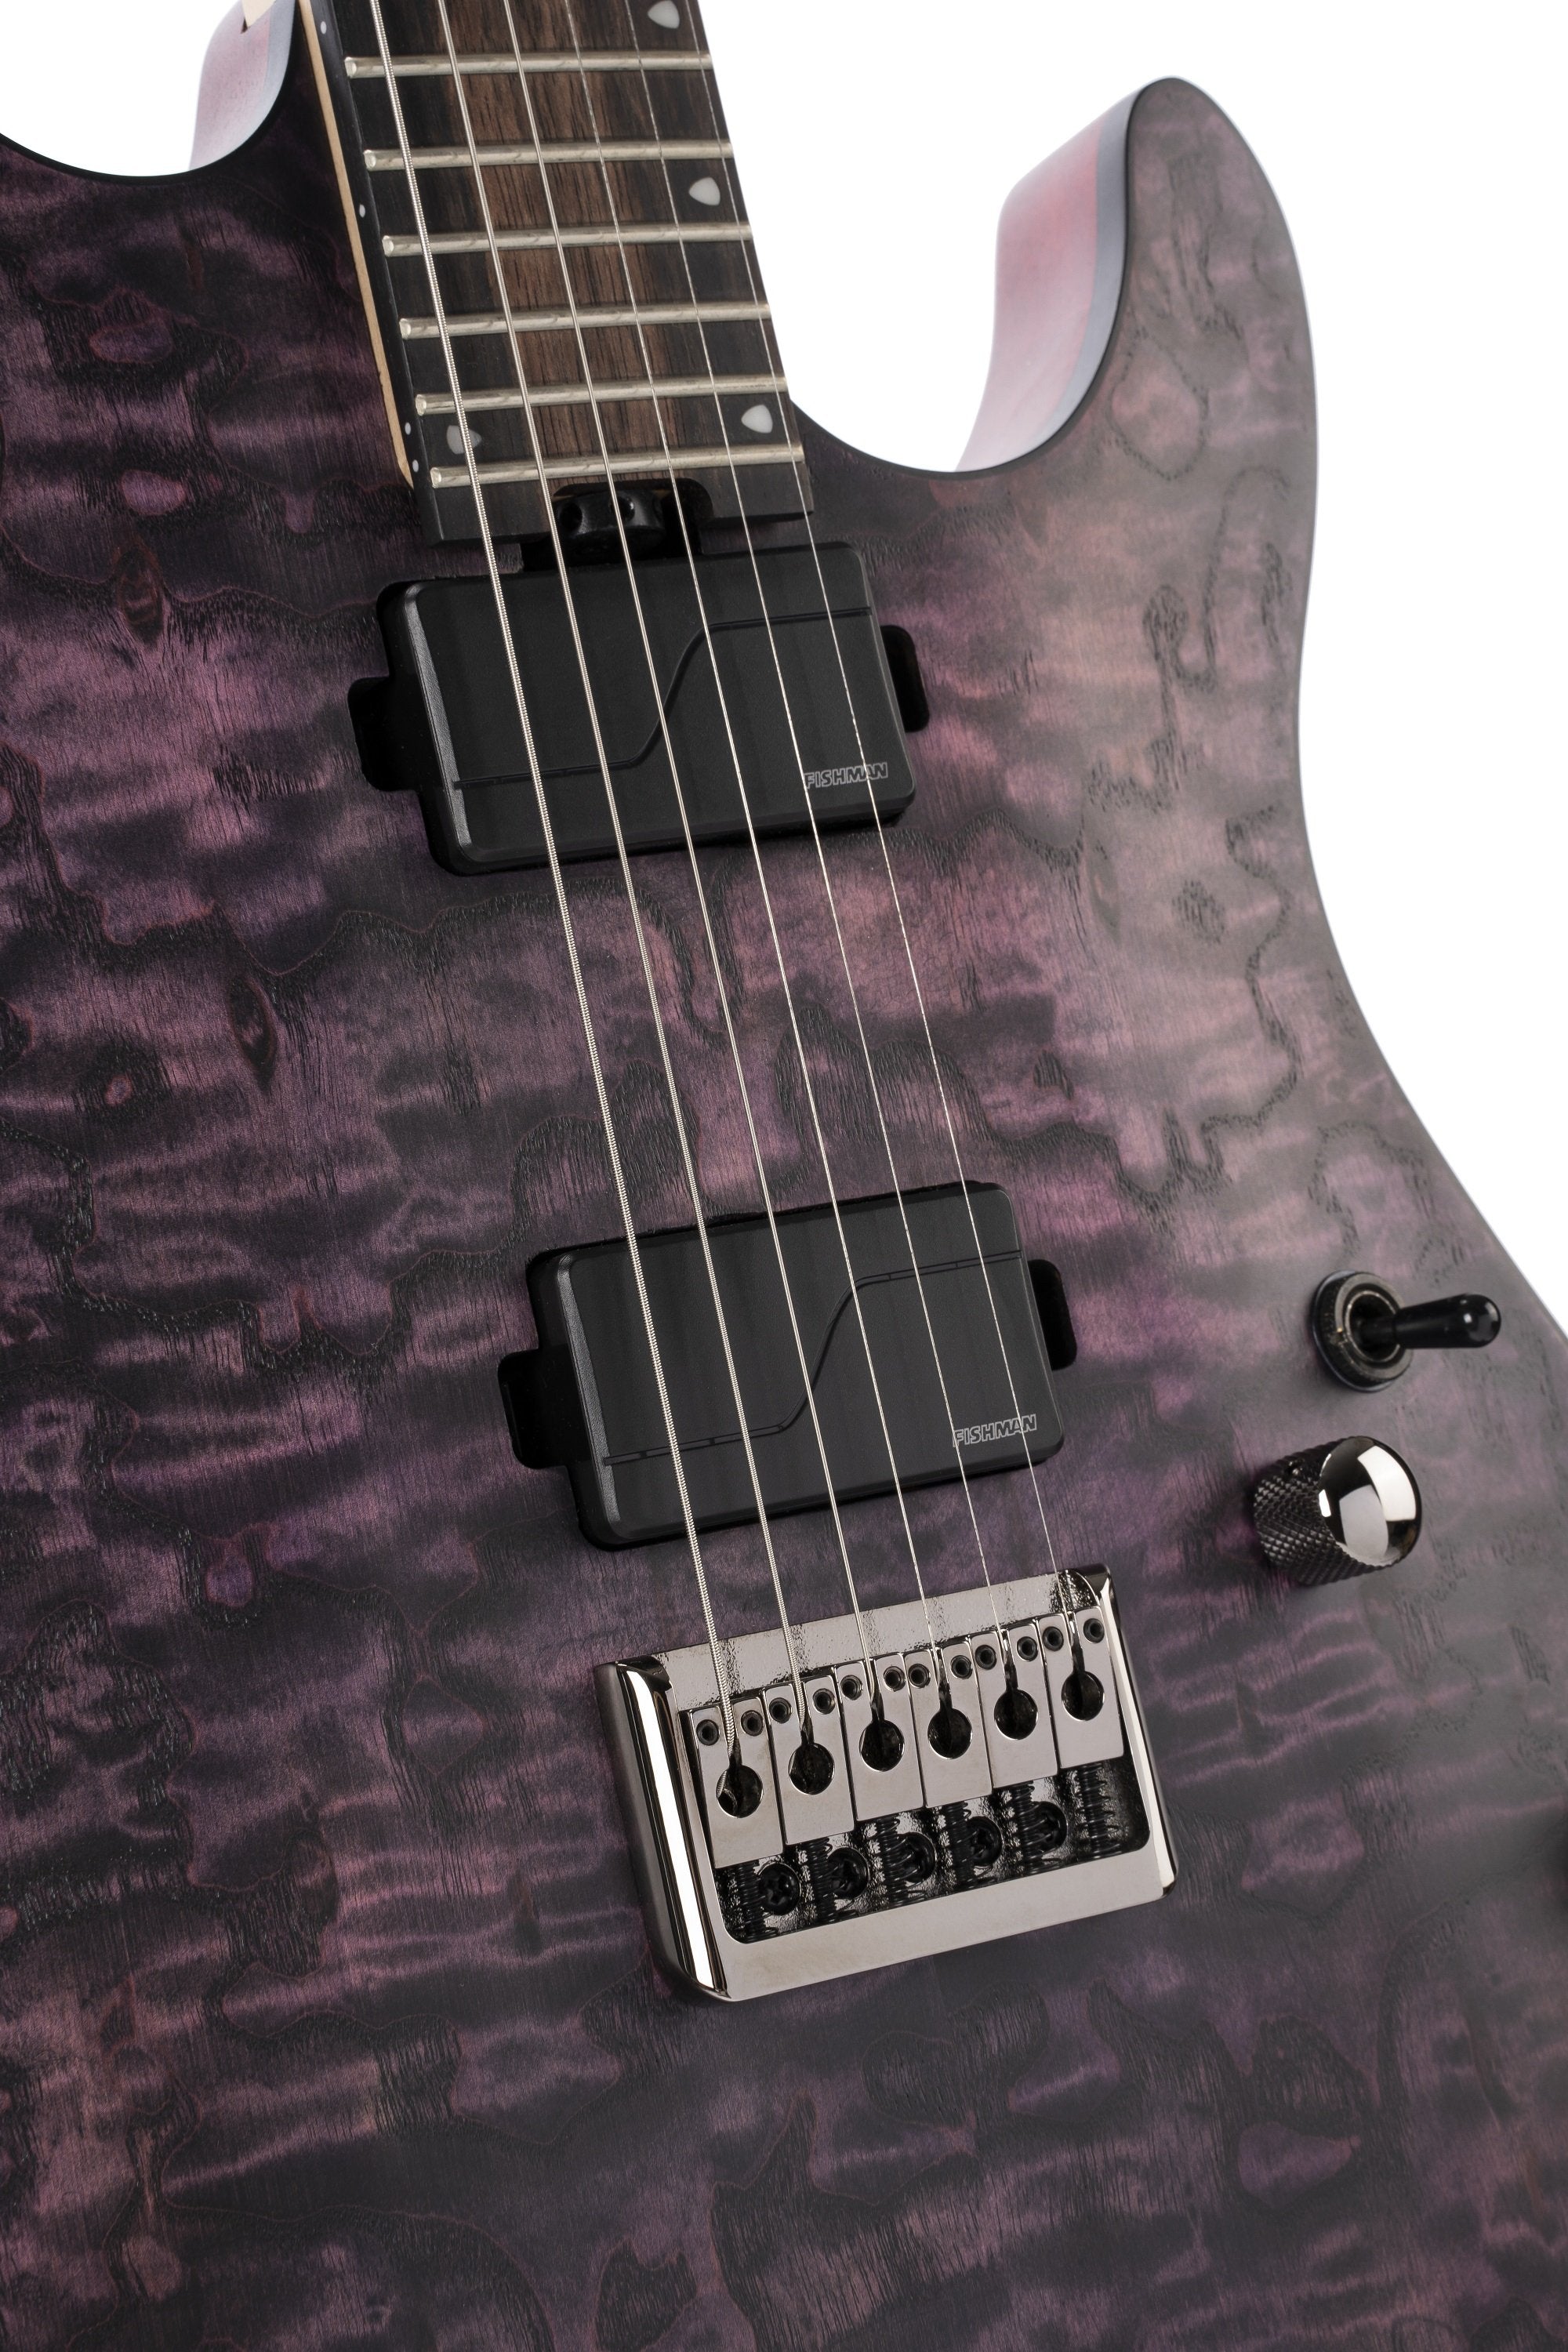 Cort KX500 Etched Deep Violet, Electric Guitar for sale at Richards Guitars.